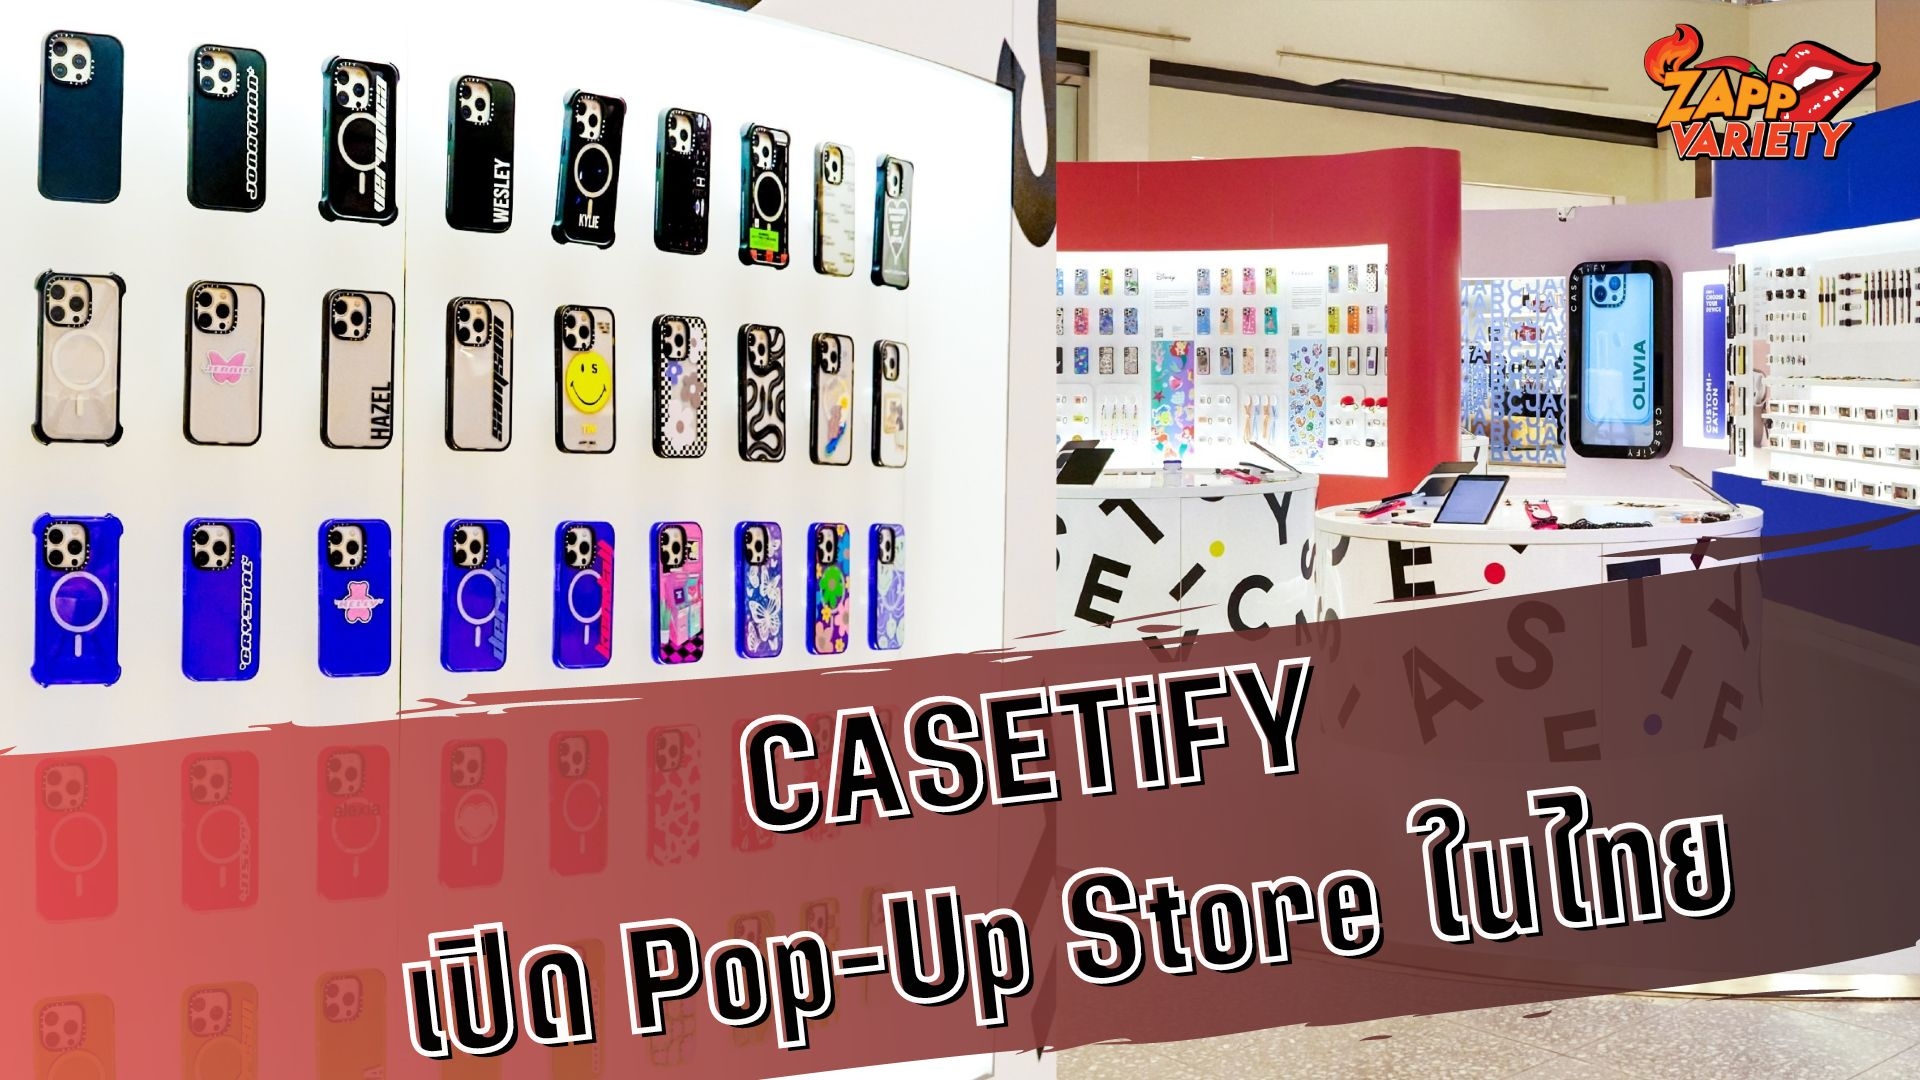 CASETiFY เปิด Pop-Up Store ในไทยครั้งแรก พร้อมเอาใจแฟนเพลง จับมือ “Jeff Satur” สร้างสรรค์คอลเล็กชั่นใหม่สุดเอ็กซ์คลูซีฟ